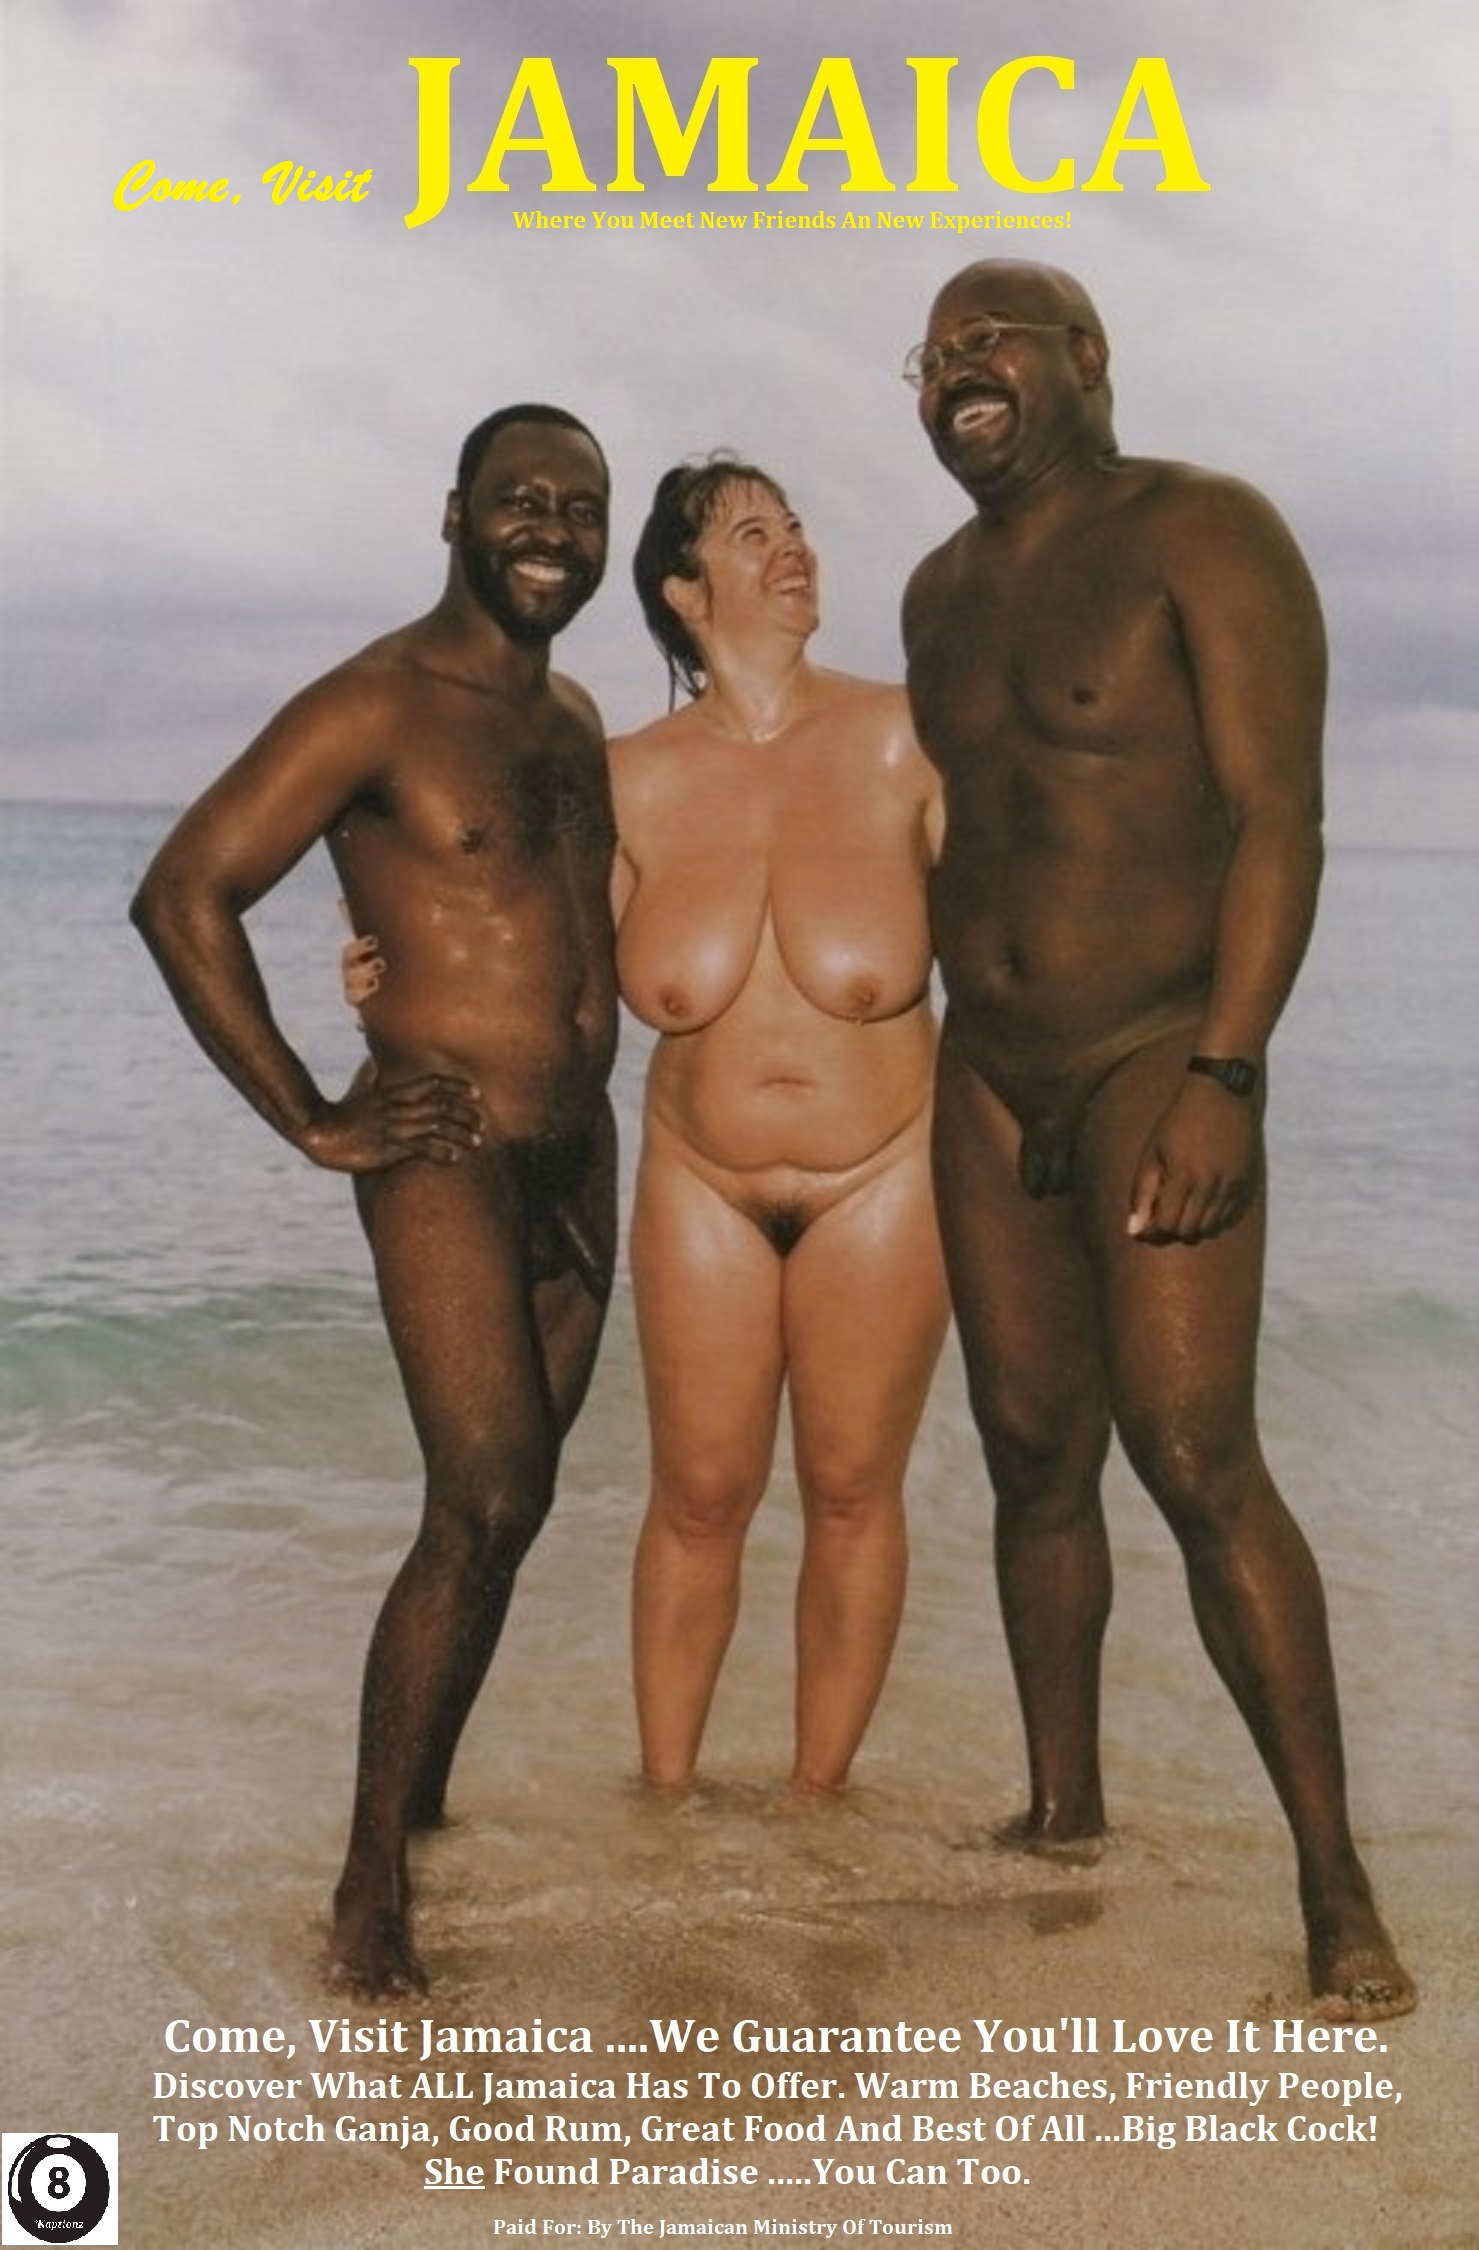 interracial cuckold vacation in jamaica